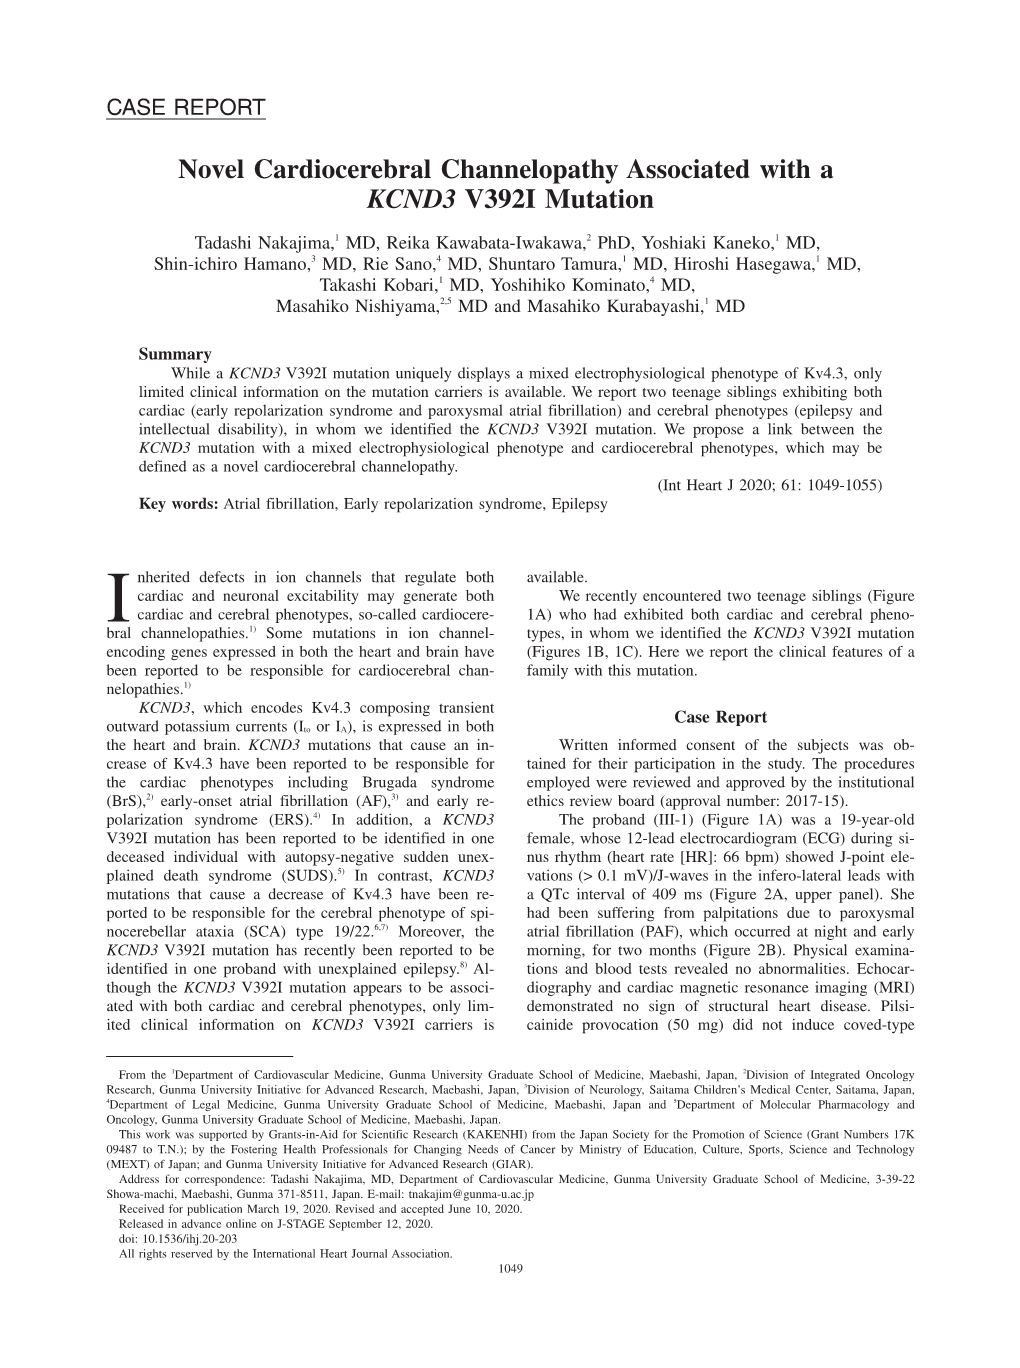 Novel Cardiocerebral Channelopathy Associated with a KCND3 V392I Mutation